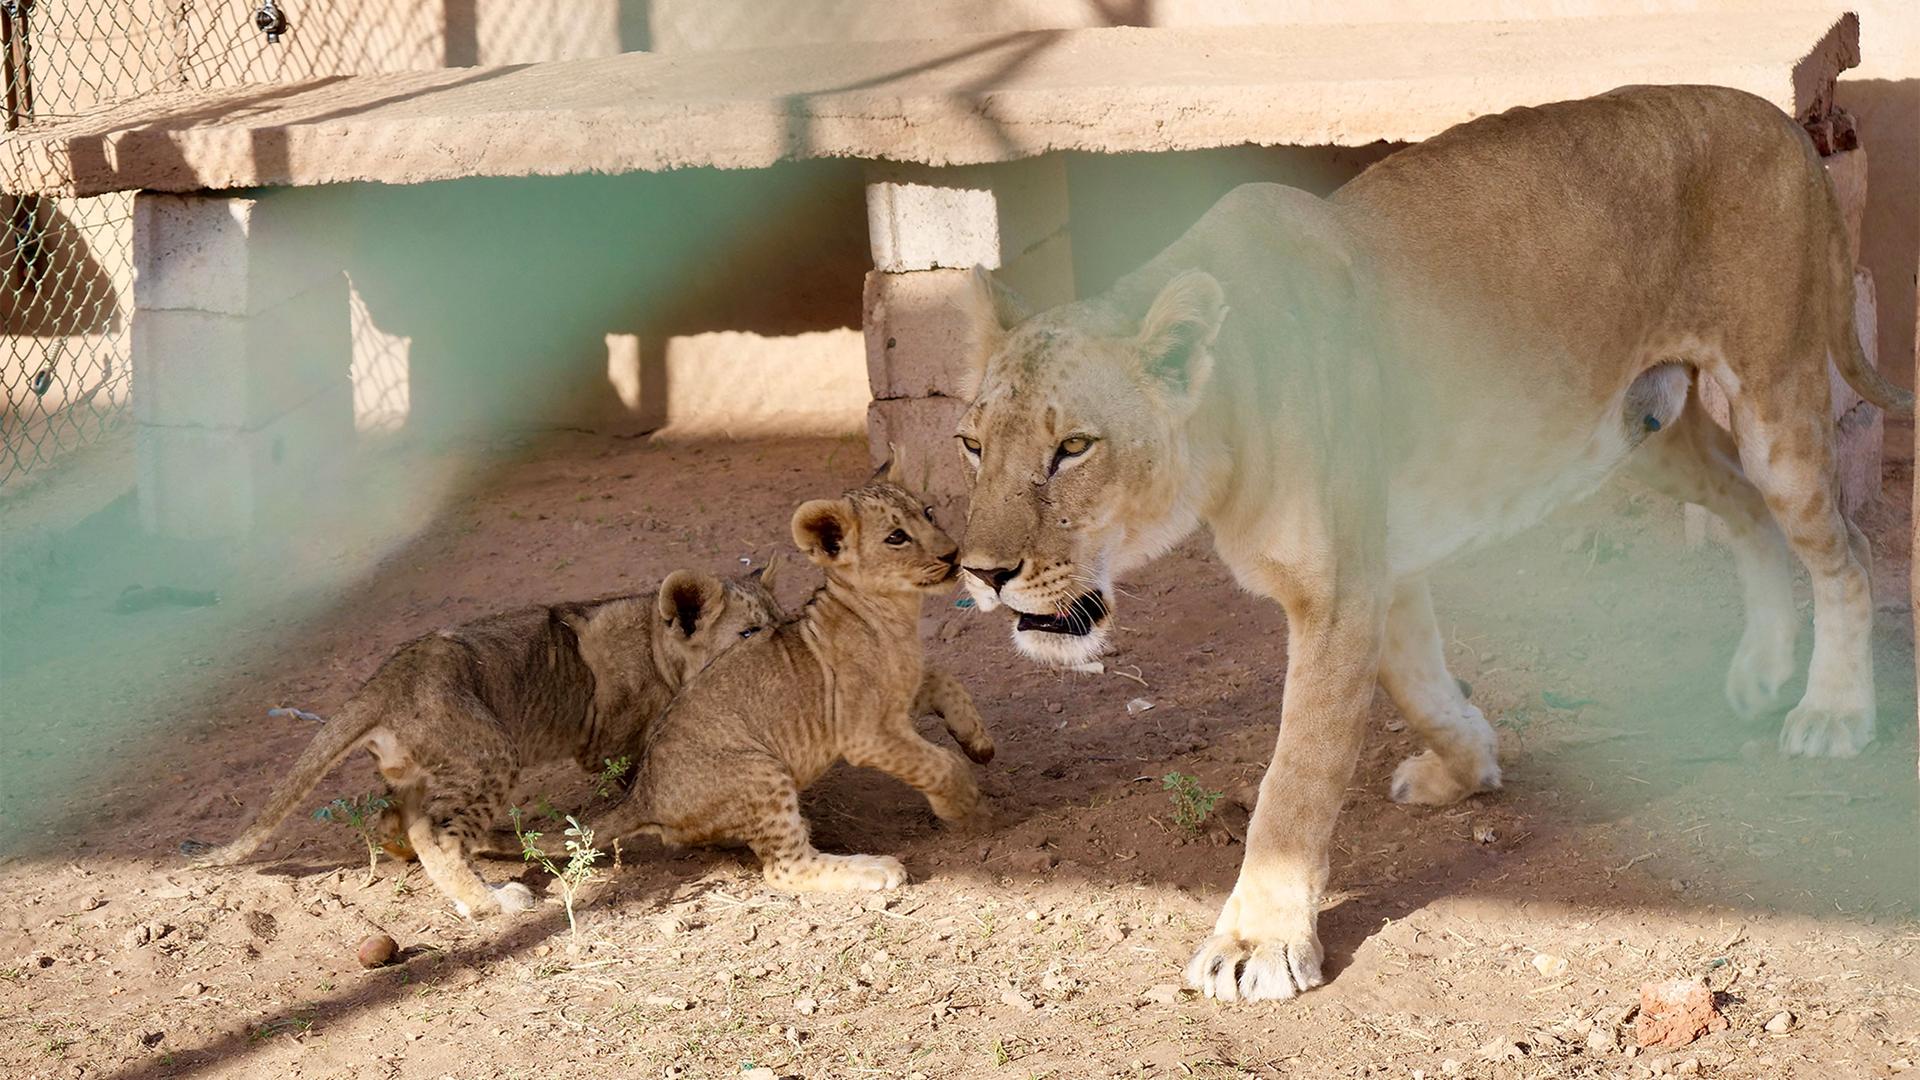 Kandaka, the lion, with her cubs at the Sudan Animal Rescue, Khartoum, Sudan, Dec, 4, 2021